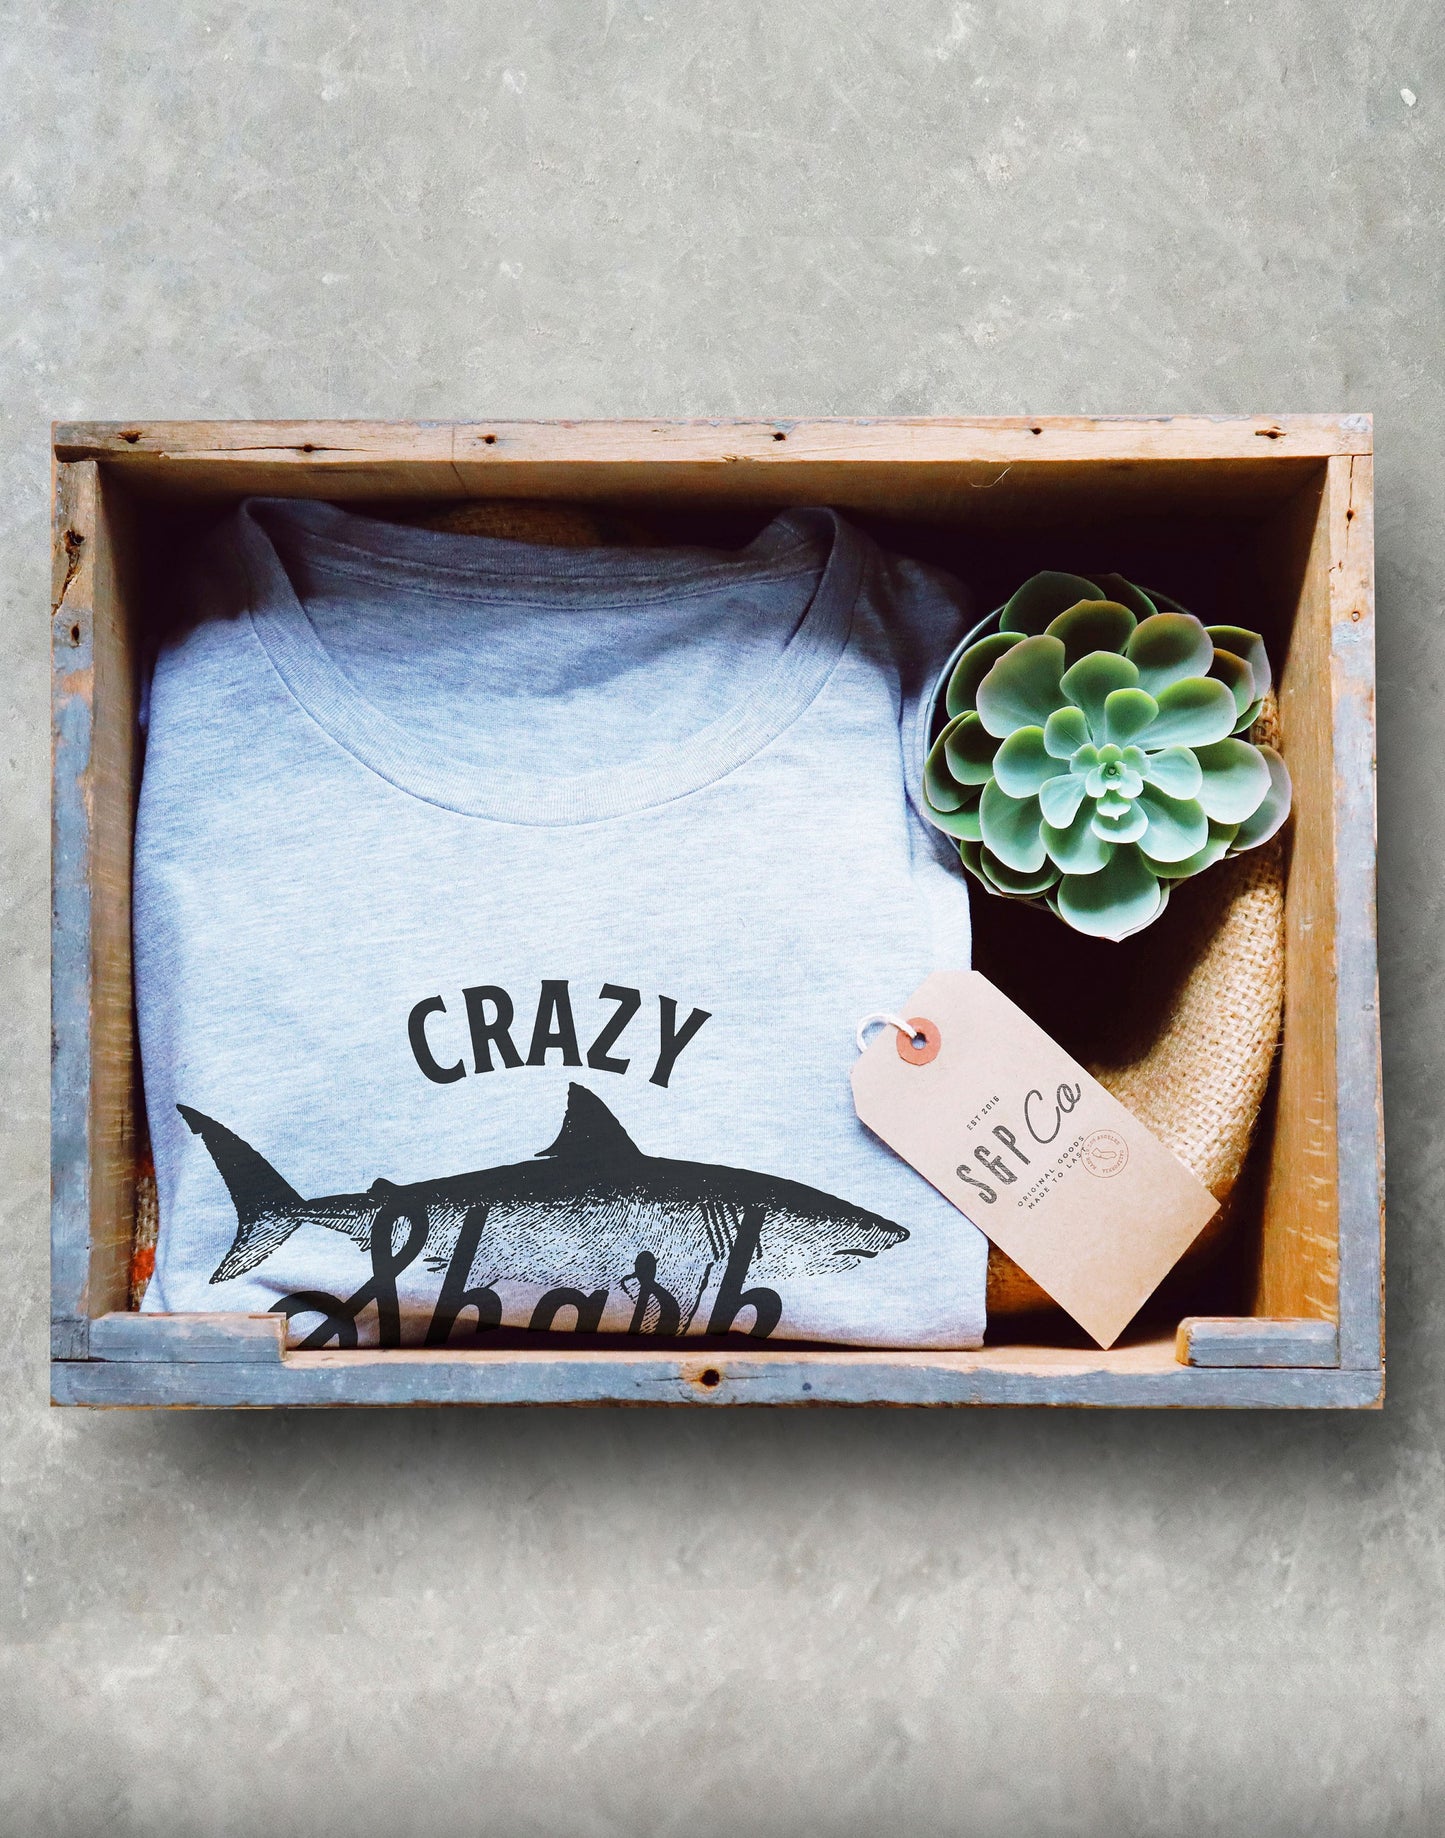 Crazy Shark Lady Unisex Shirt - Shark Shirt, Shark Gift, Shark Birthday, Shark Week Shirt, Sea Life Shirt, Sea Life Gift